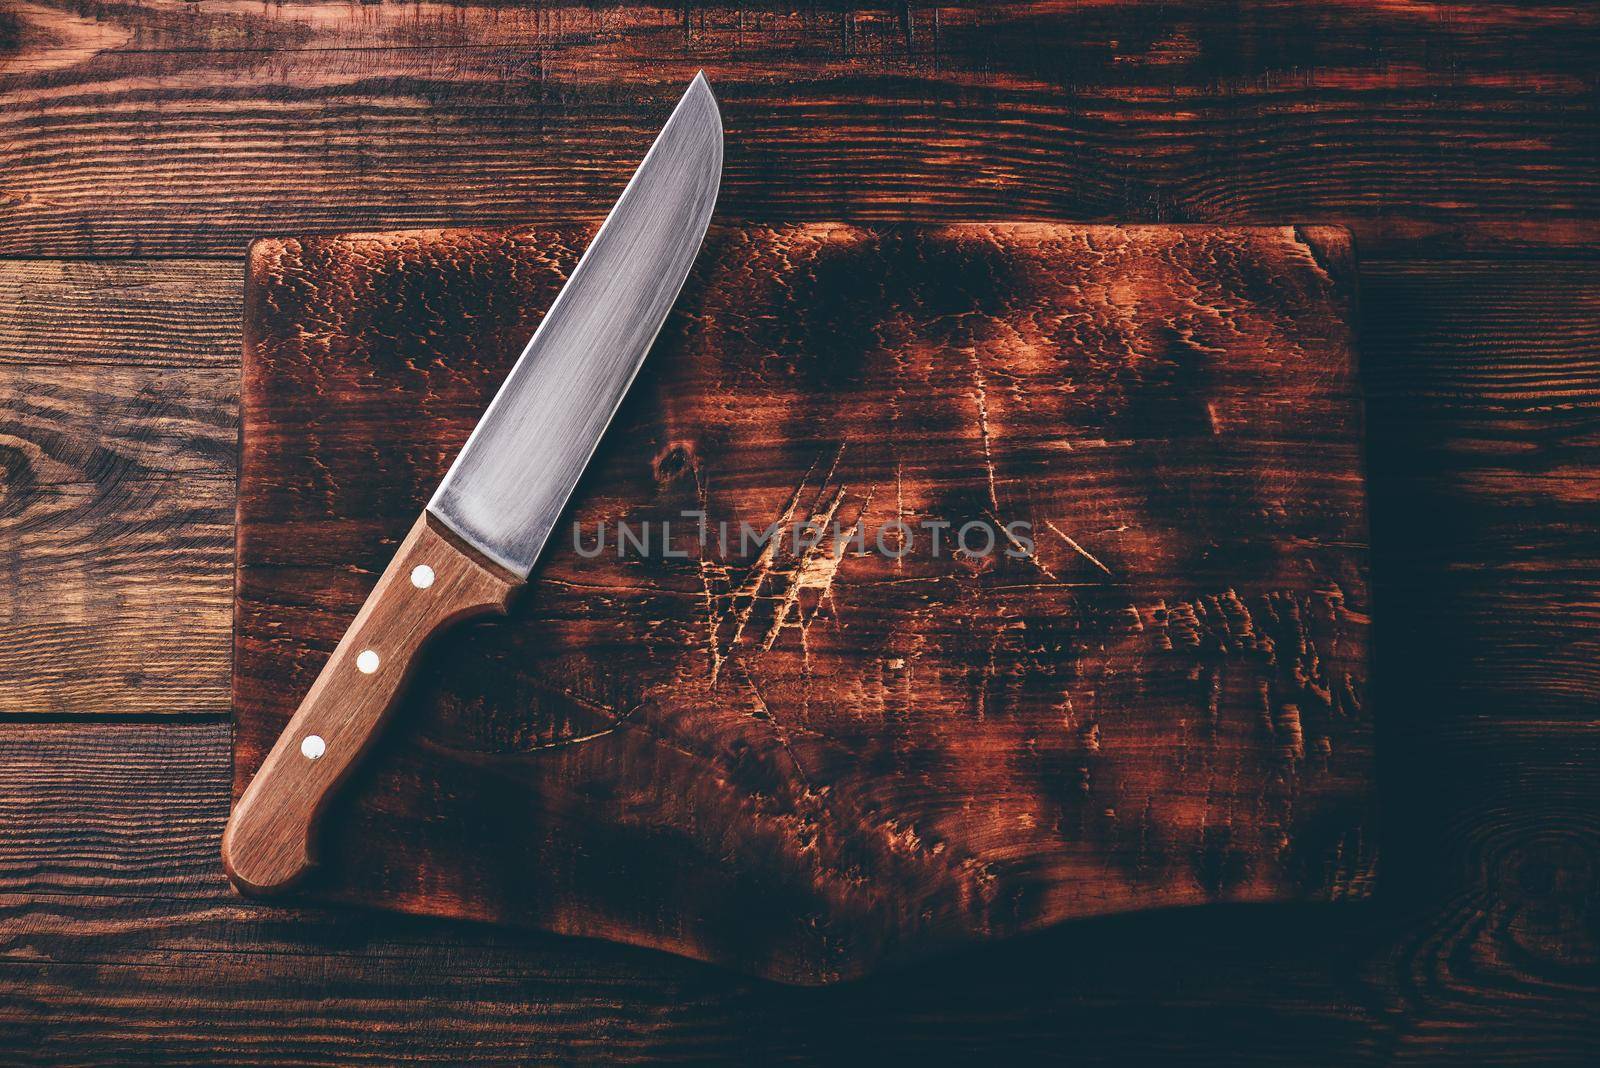 Knife over wooden cutting board by Seva_blsv